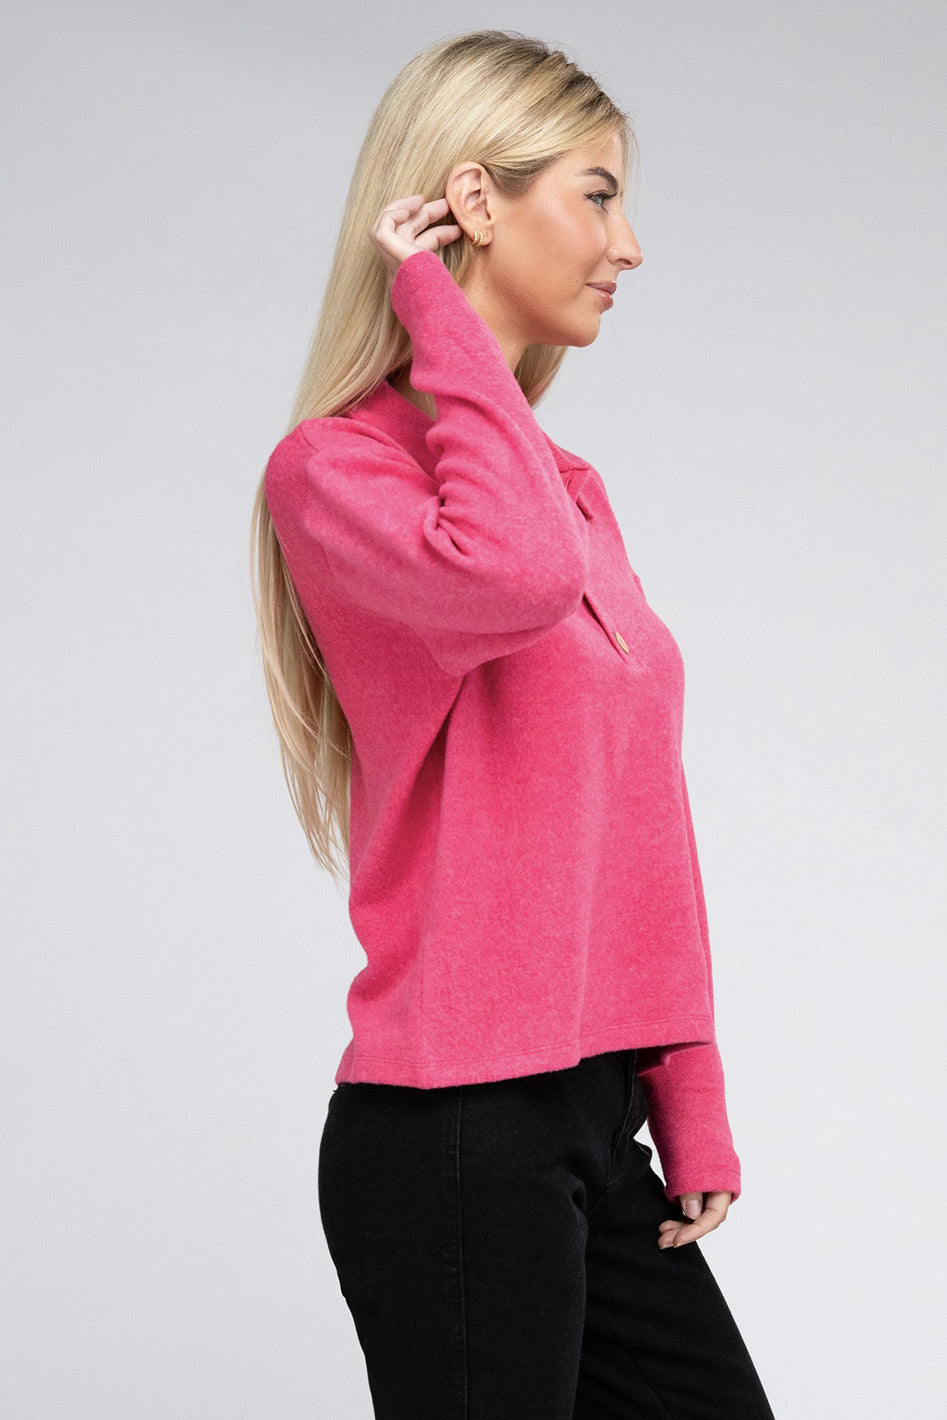 Brushed Melange Hacci Collared Sweater - Azoroh